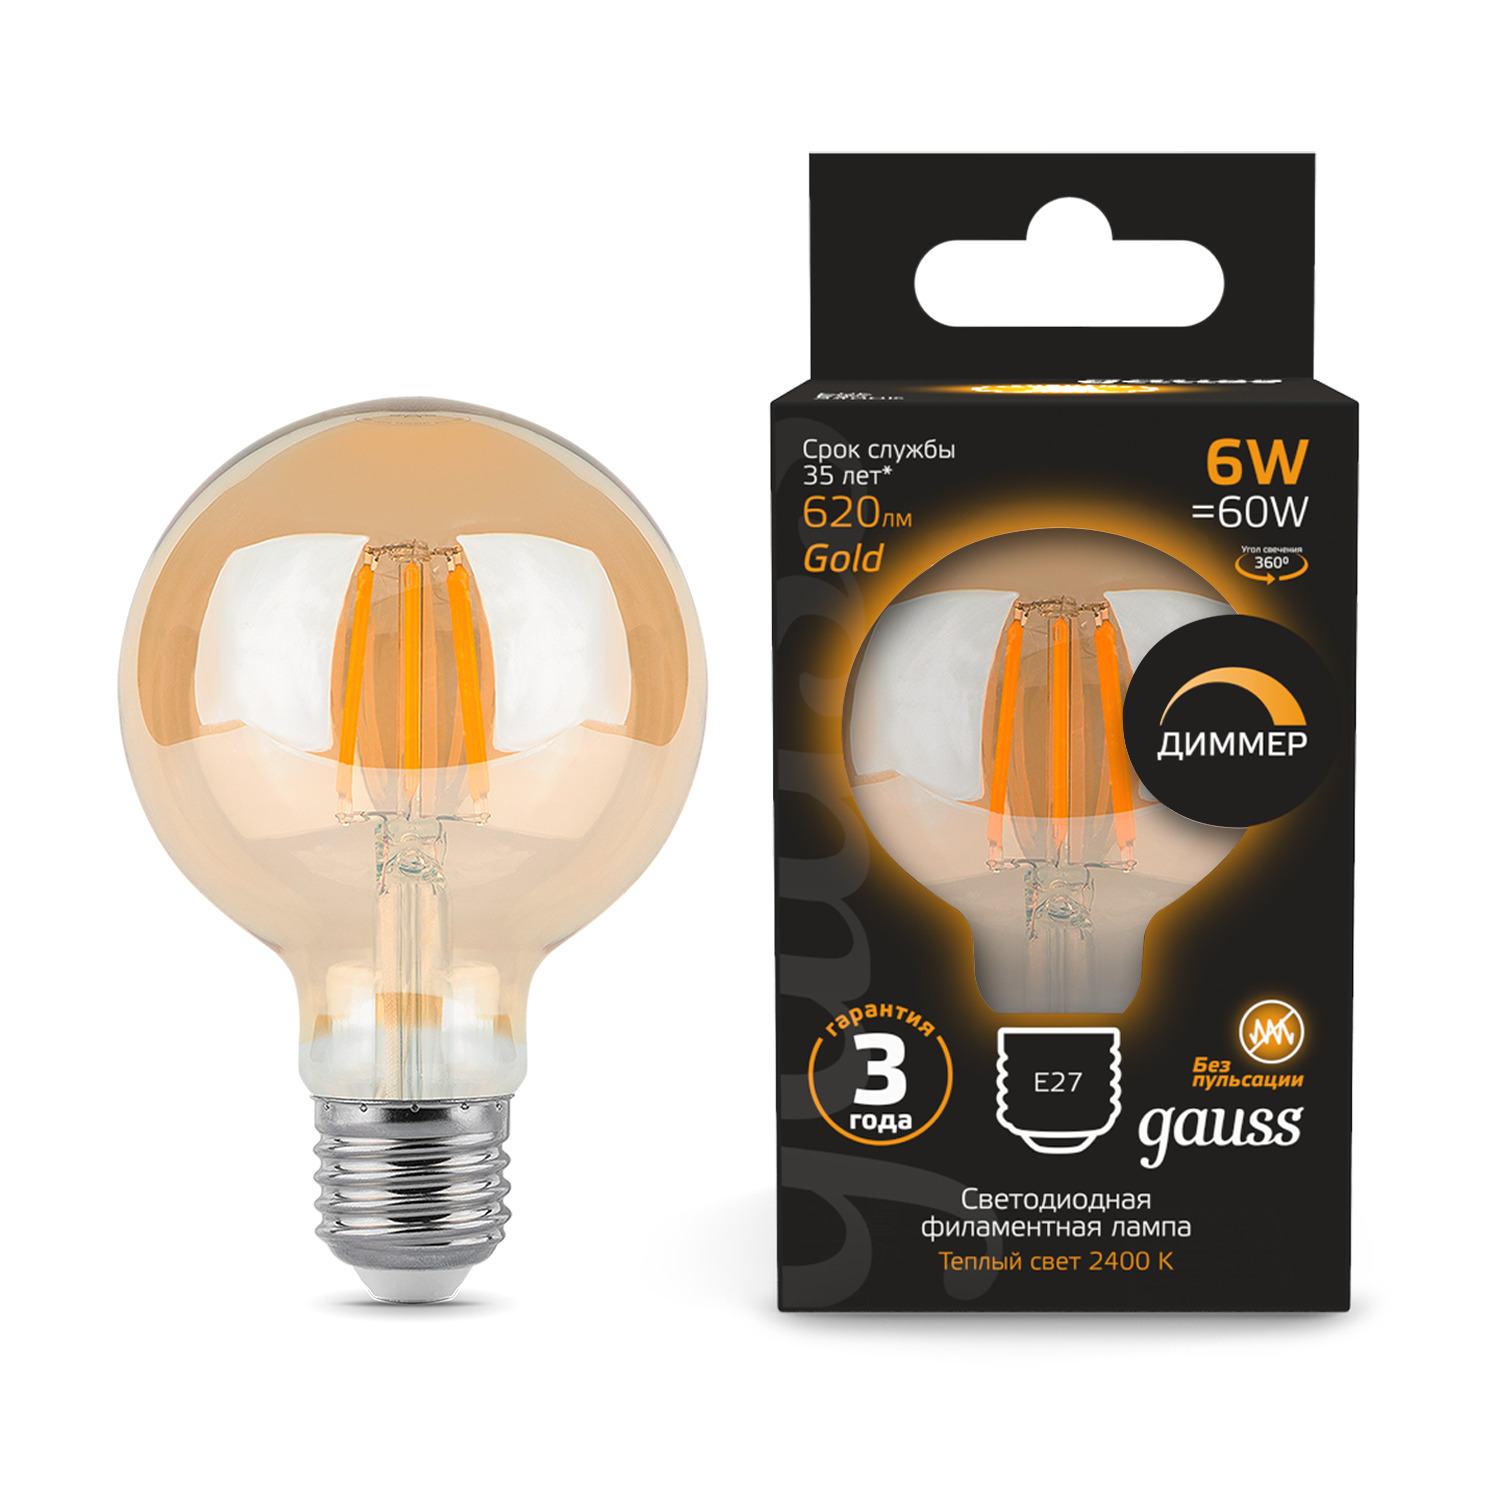 цена Лампа Gauss Filament G95 6W 620lm 2400К Е27 golden диммируемая LED